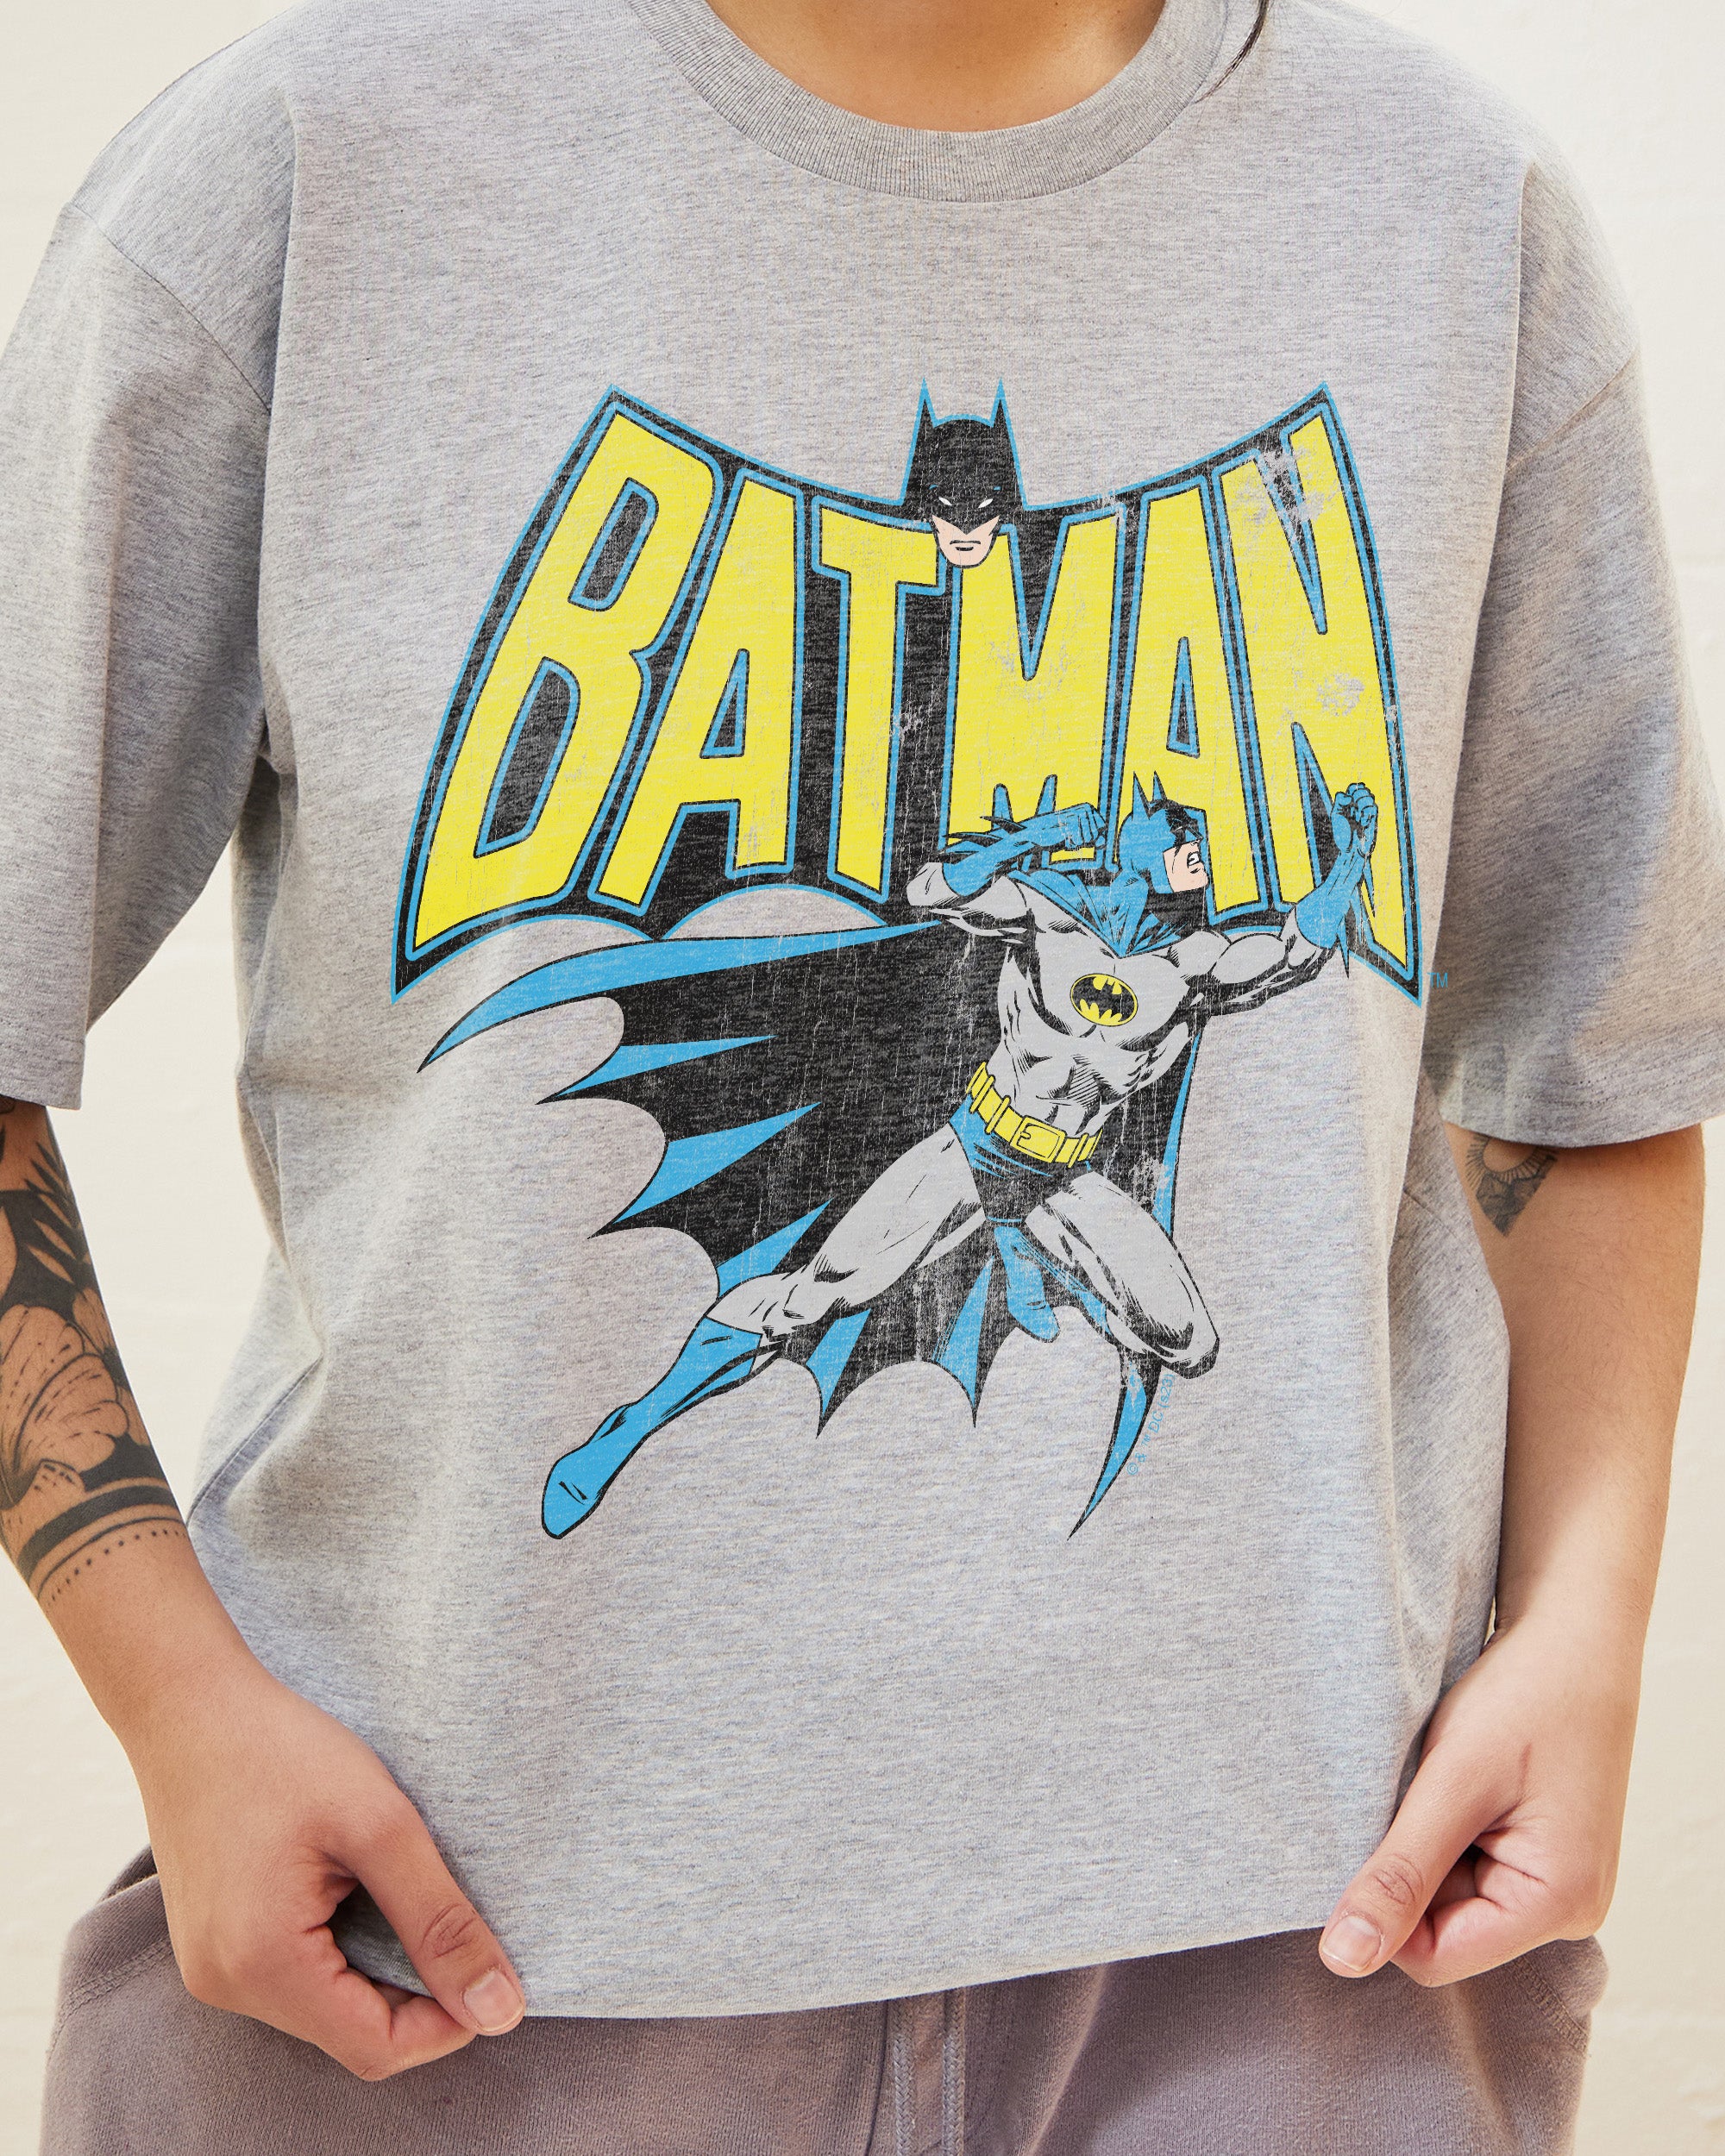 Bat Attack Logo T-Shirt